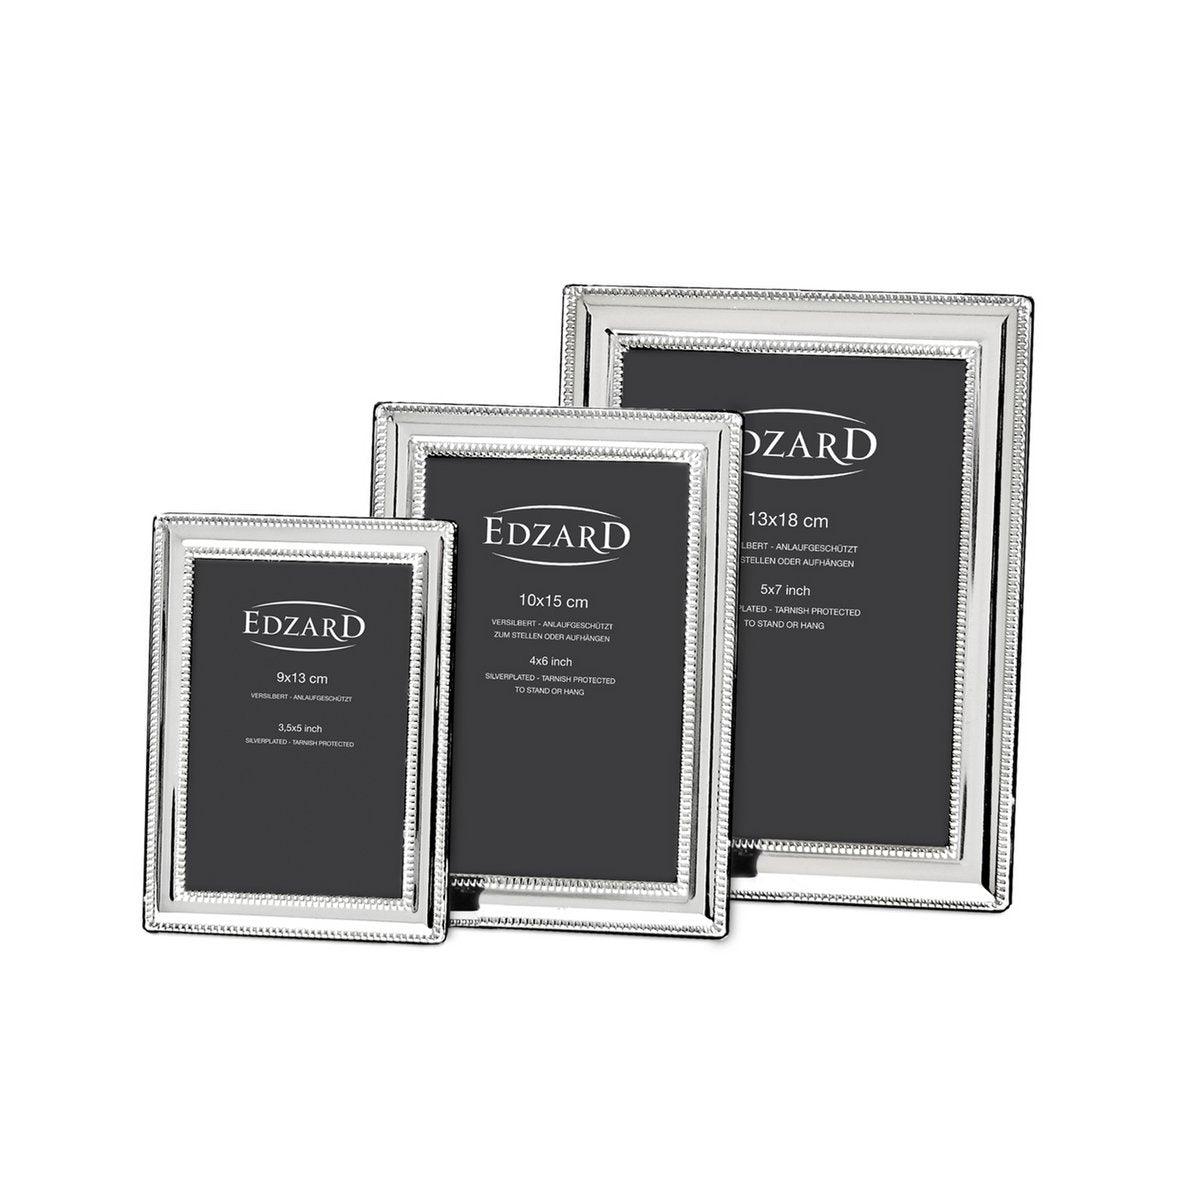 EDZARD Fotorahmen Bilderrahmen Matera für Foto 10 x 15 cm, edel versilbert, anlaufgeschützt, 2 Aufhänger - HomeDesign Knaus